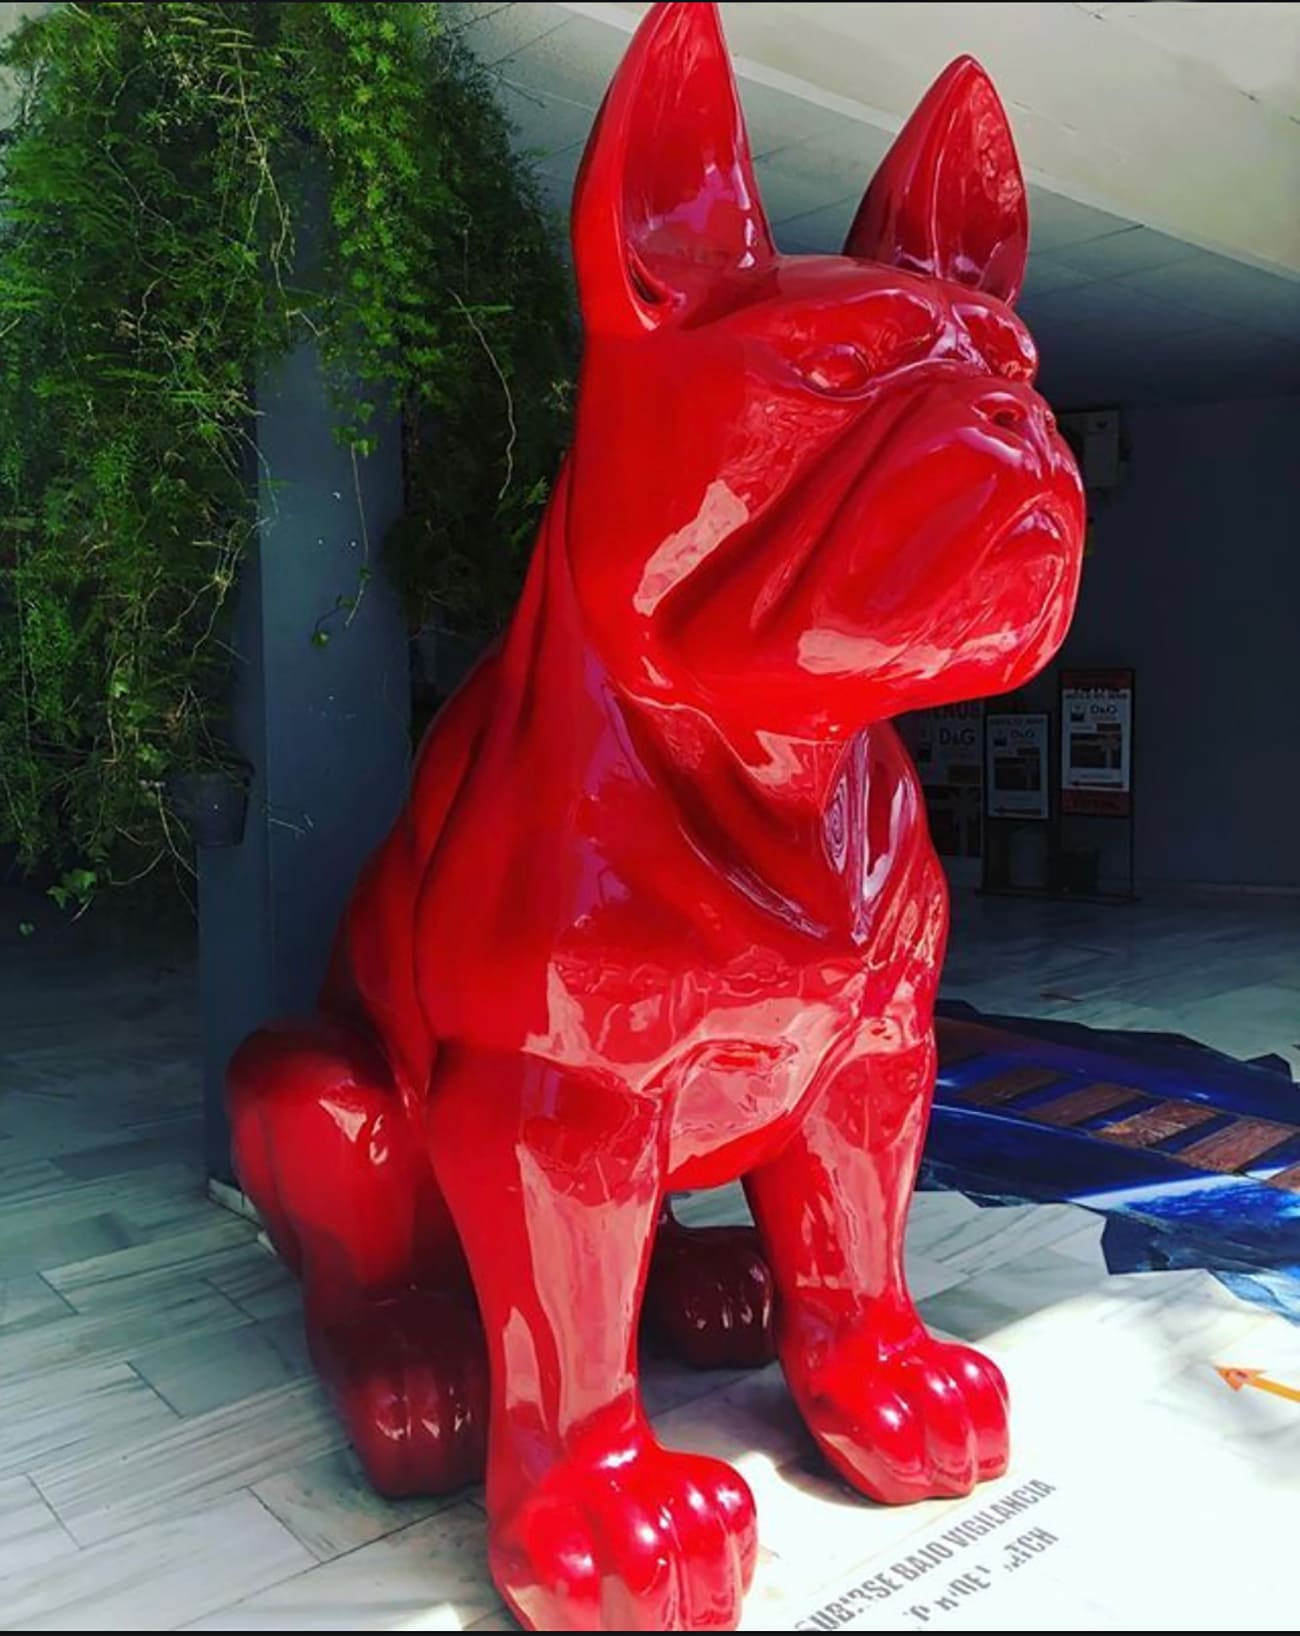 Red Dog - Puerto Banus